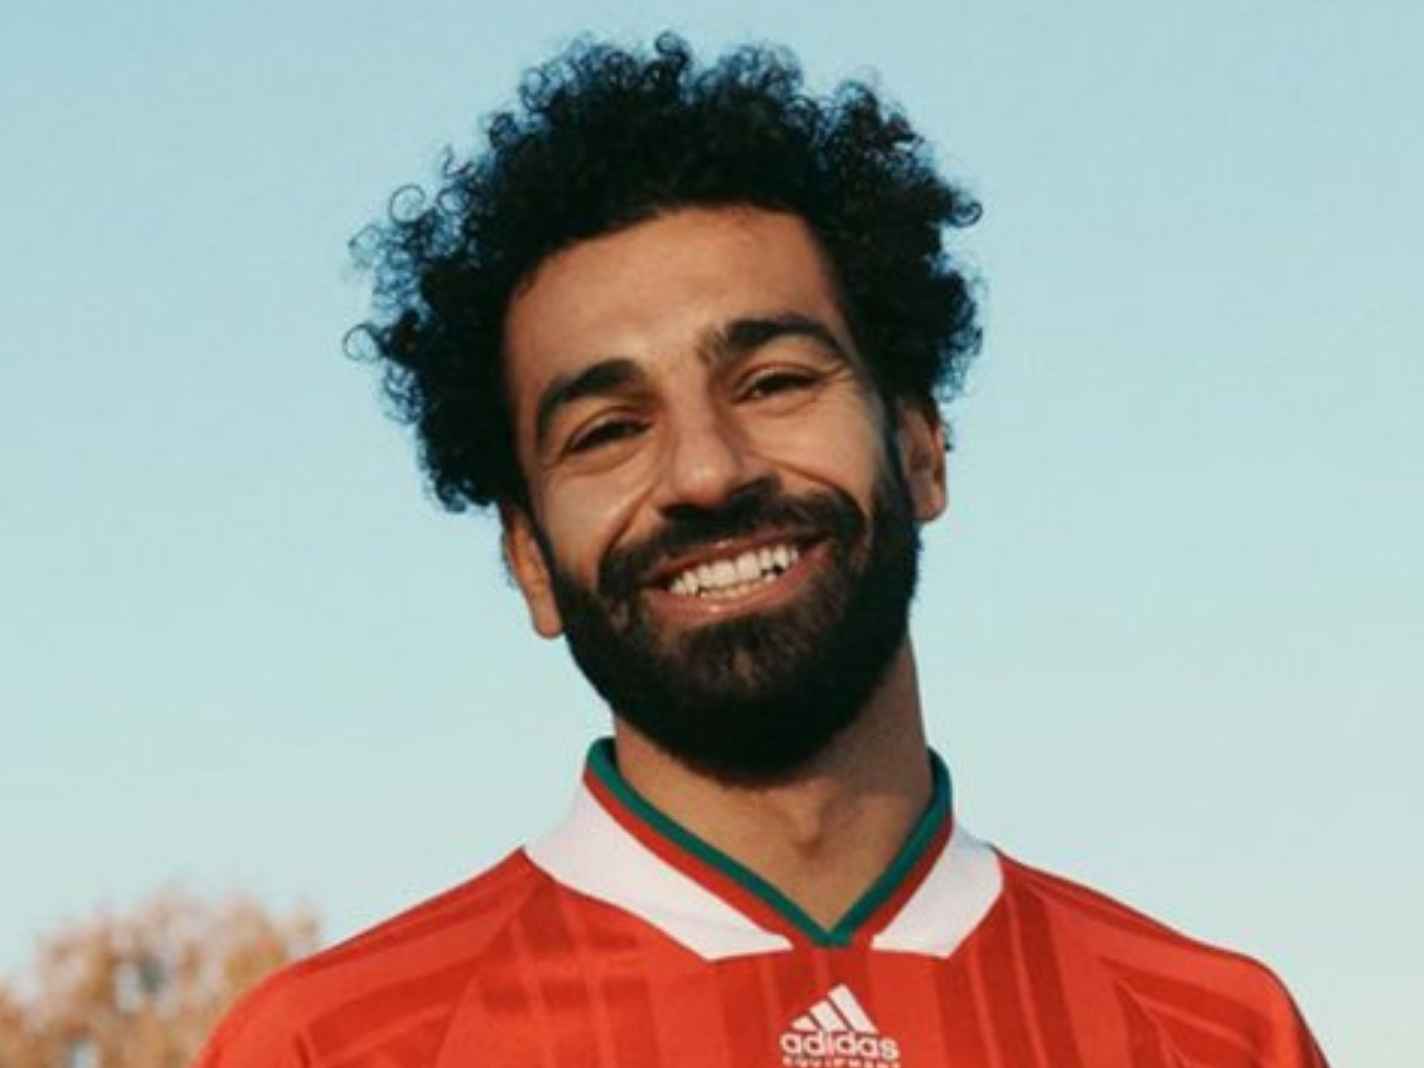 Mohamed Salah rocks retro Liverpool kit for GQ photoshoot – and Twitter loved it